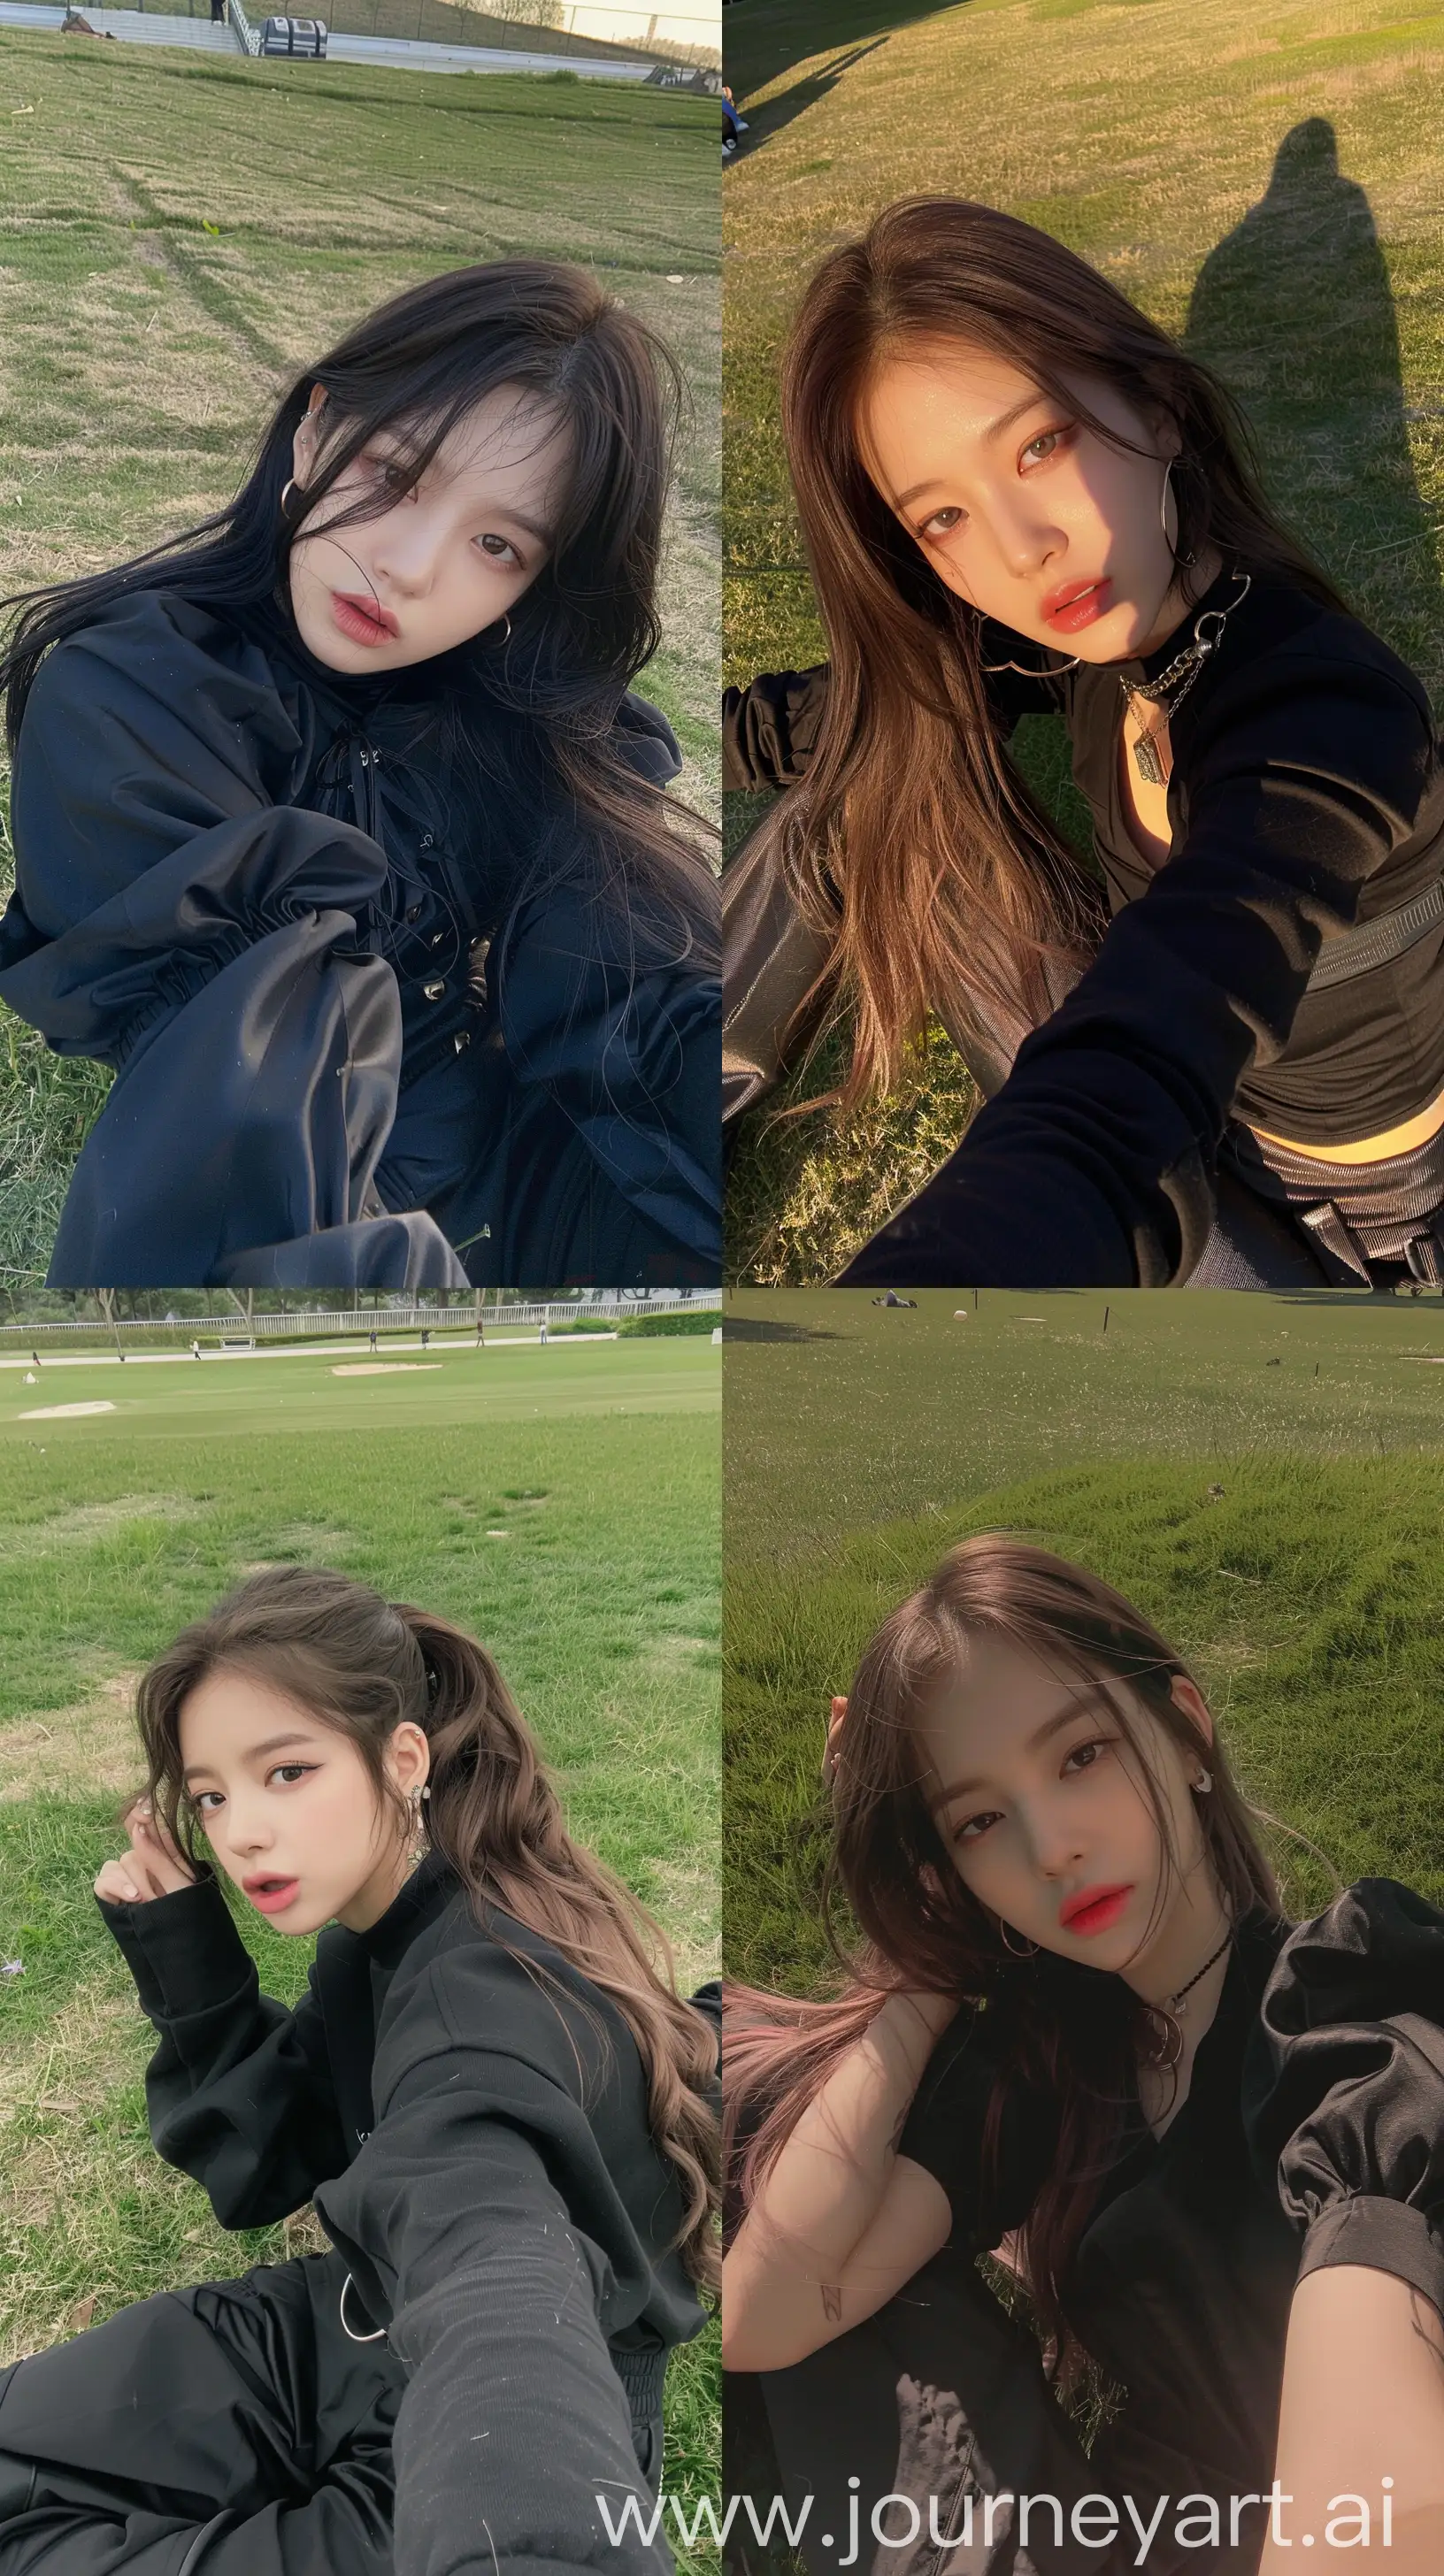 Blackpinks-Jennie-Sitting-on-Grass-in-Cute-Black-Outfit-Selfie